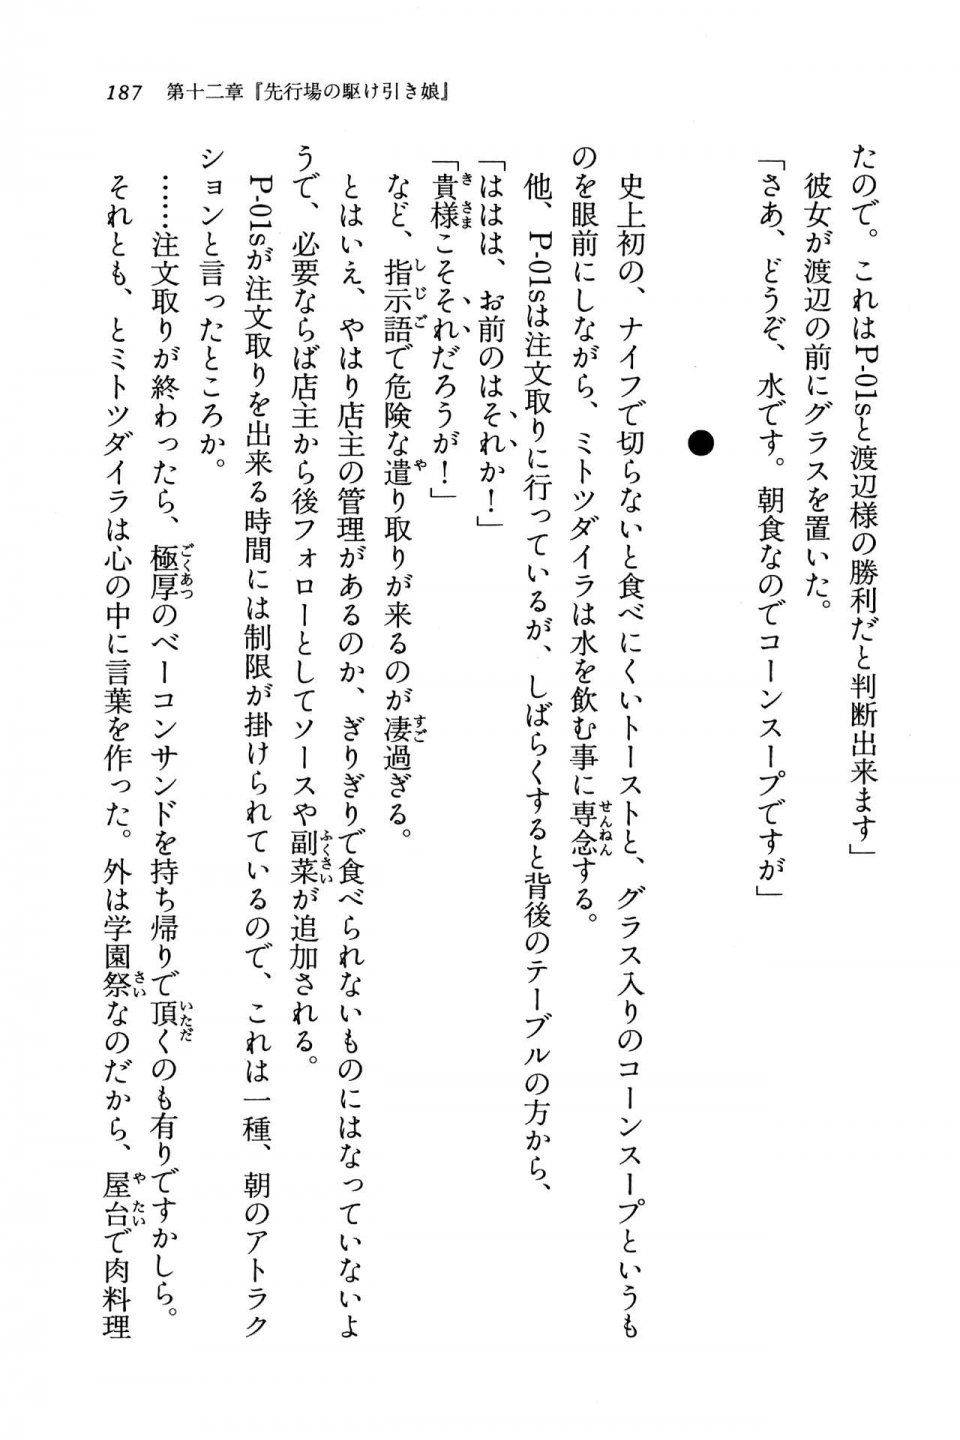 Kyoukai Senjou no Horizon BD Special Mininovel Vol 8(4B) - Photo #191